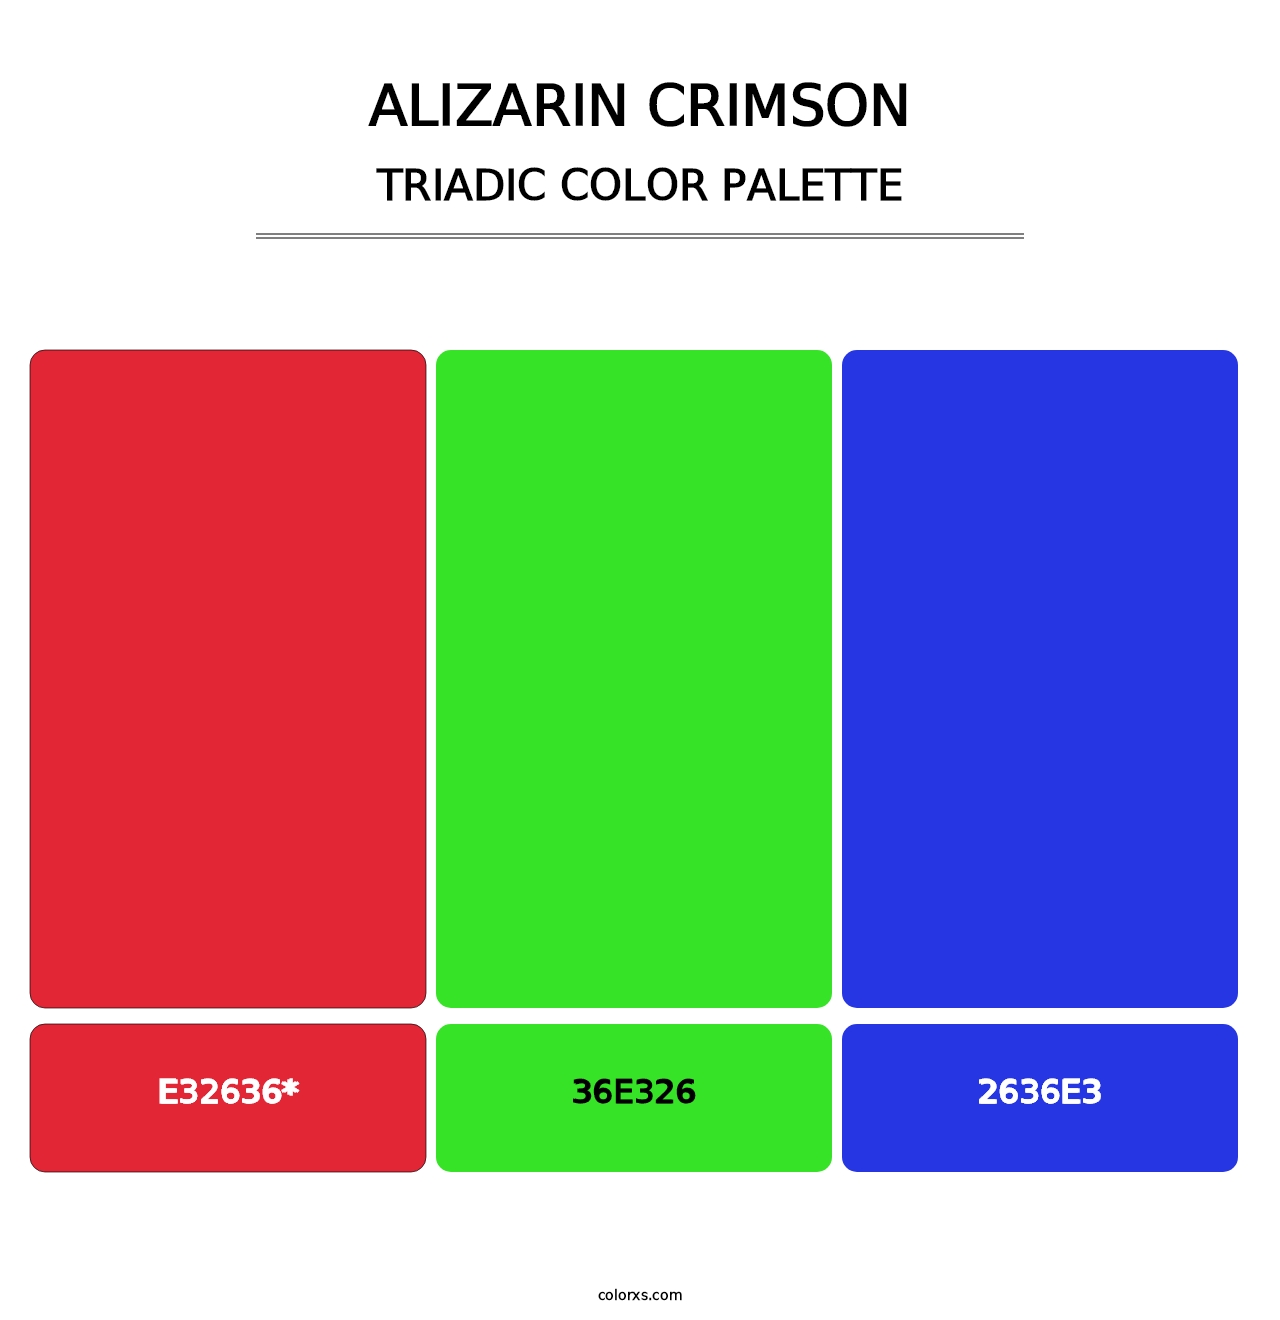 Alizarin Crimson - Triadic Color Palette